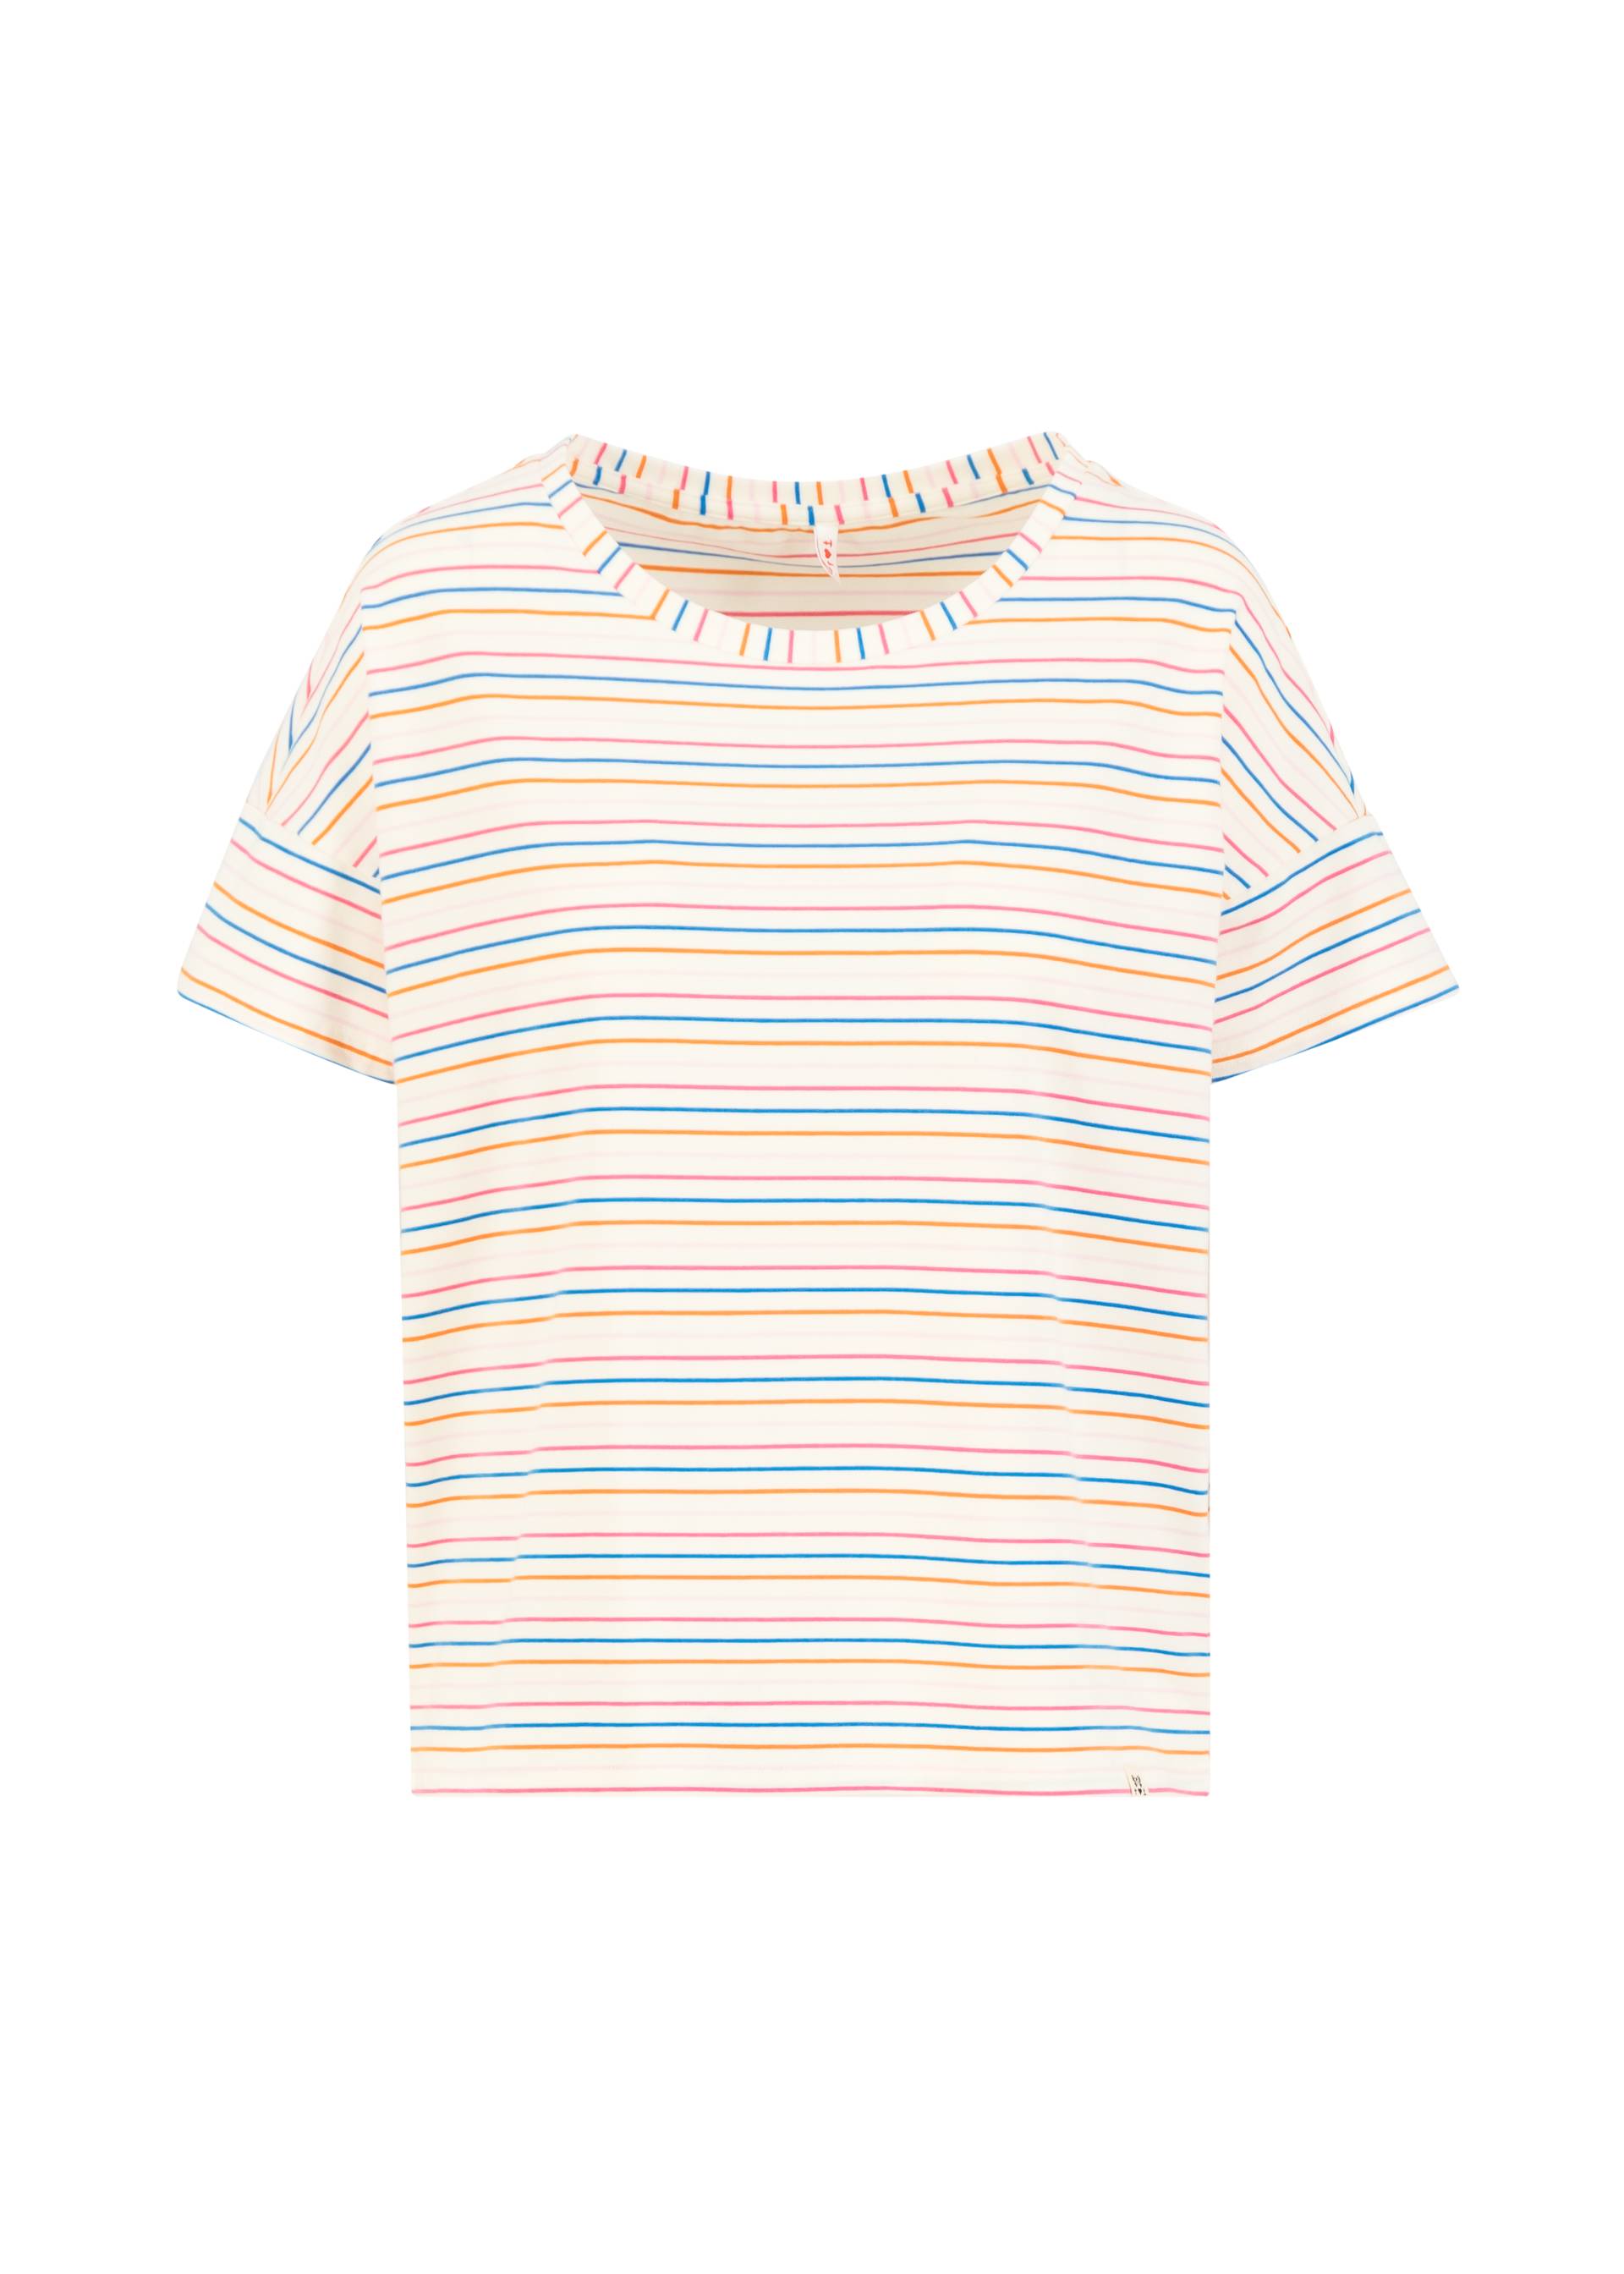 T-Shirt The Generous One, petite rainbow stripes, Tops, White